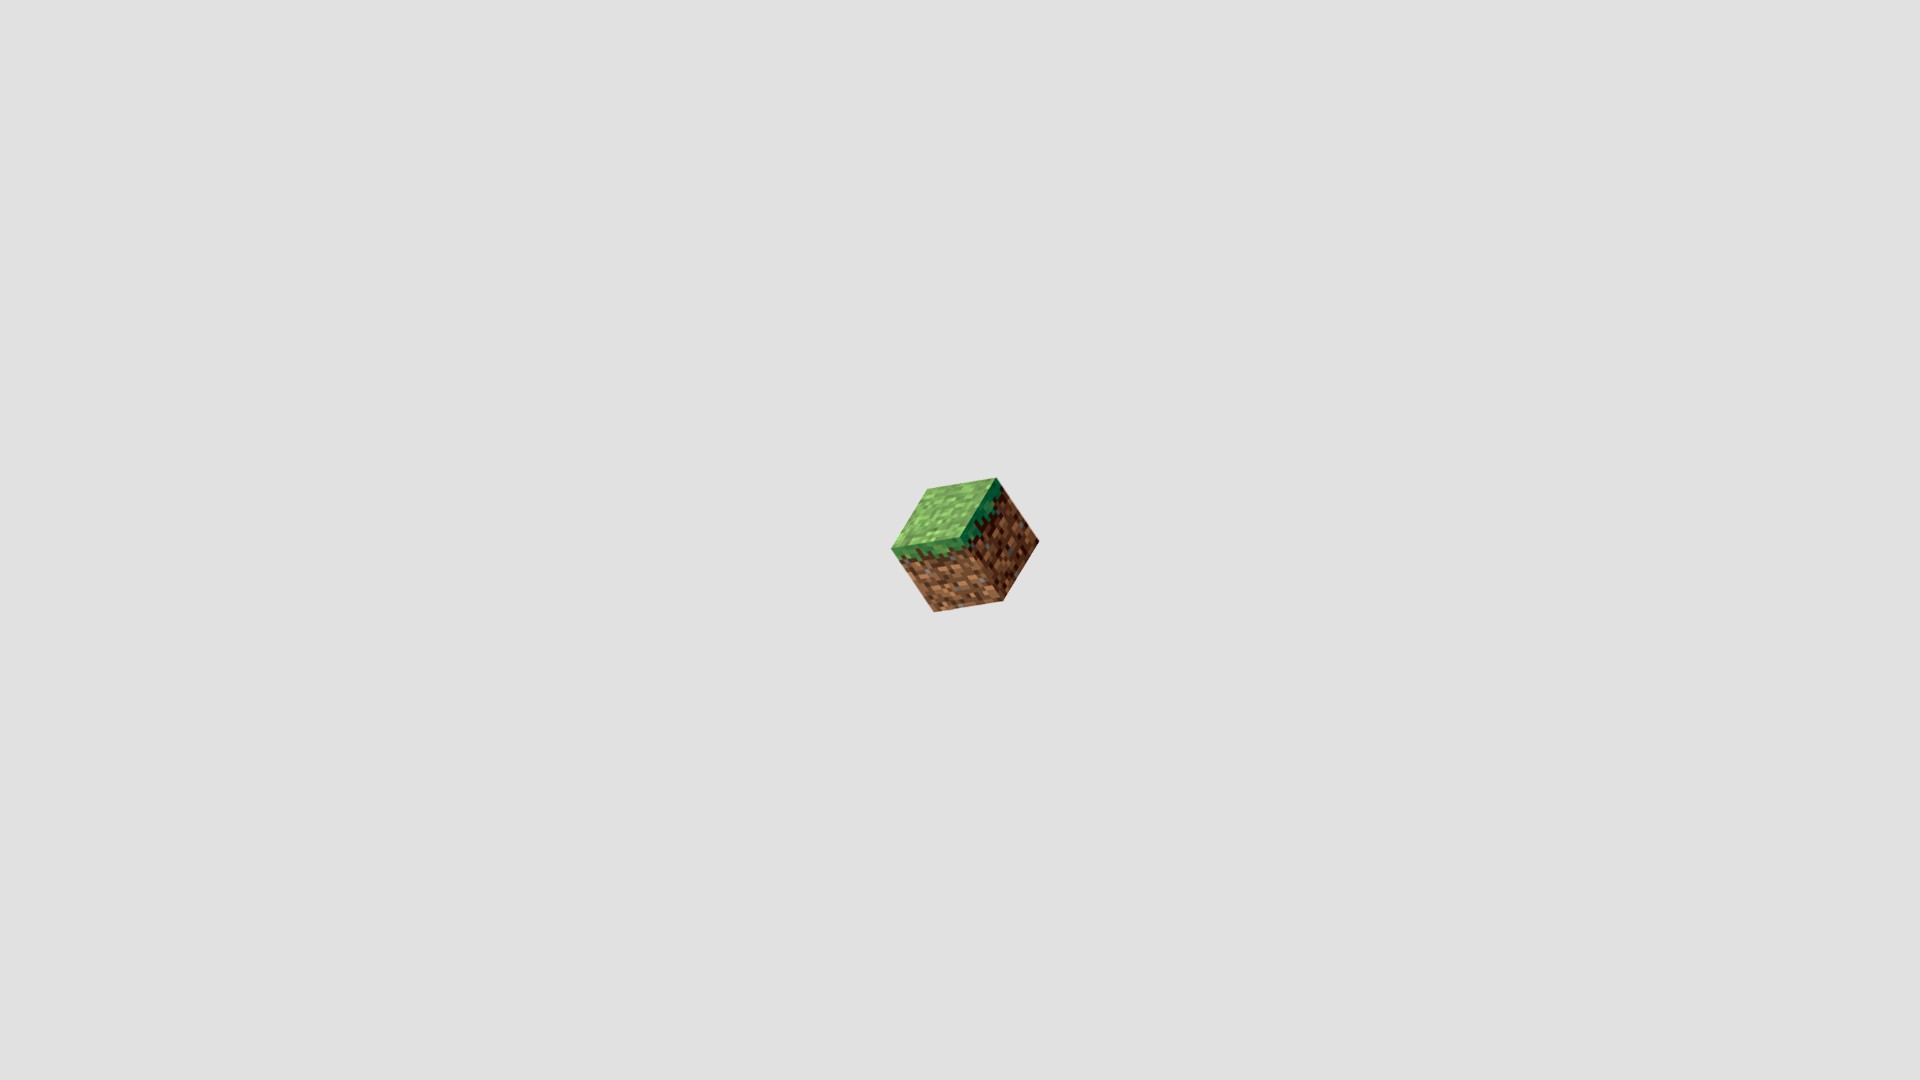 General 1920x1080 Minecraft cube minimalism video games PC gaming simple background 3D Blocks CGI video game art